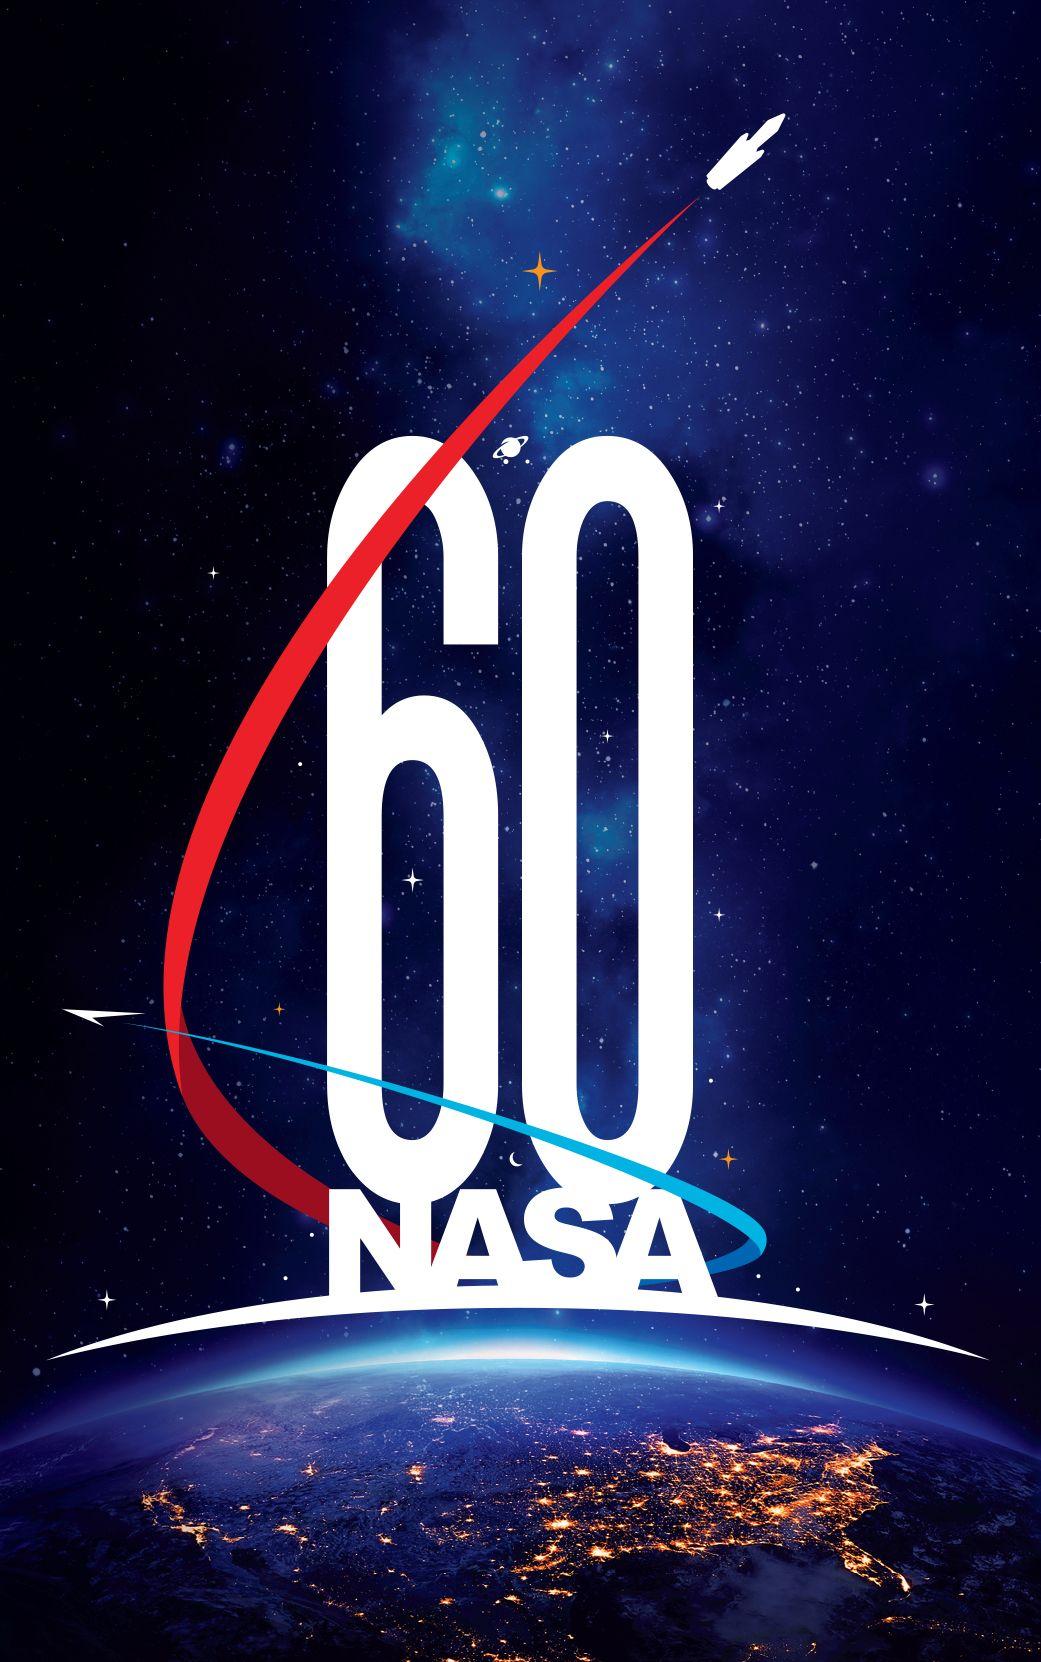 Custom NASA Logo - New NASA Logo For Upcoming 60th Anniversary Designed by Matthew Skeins